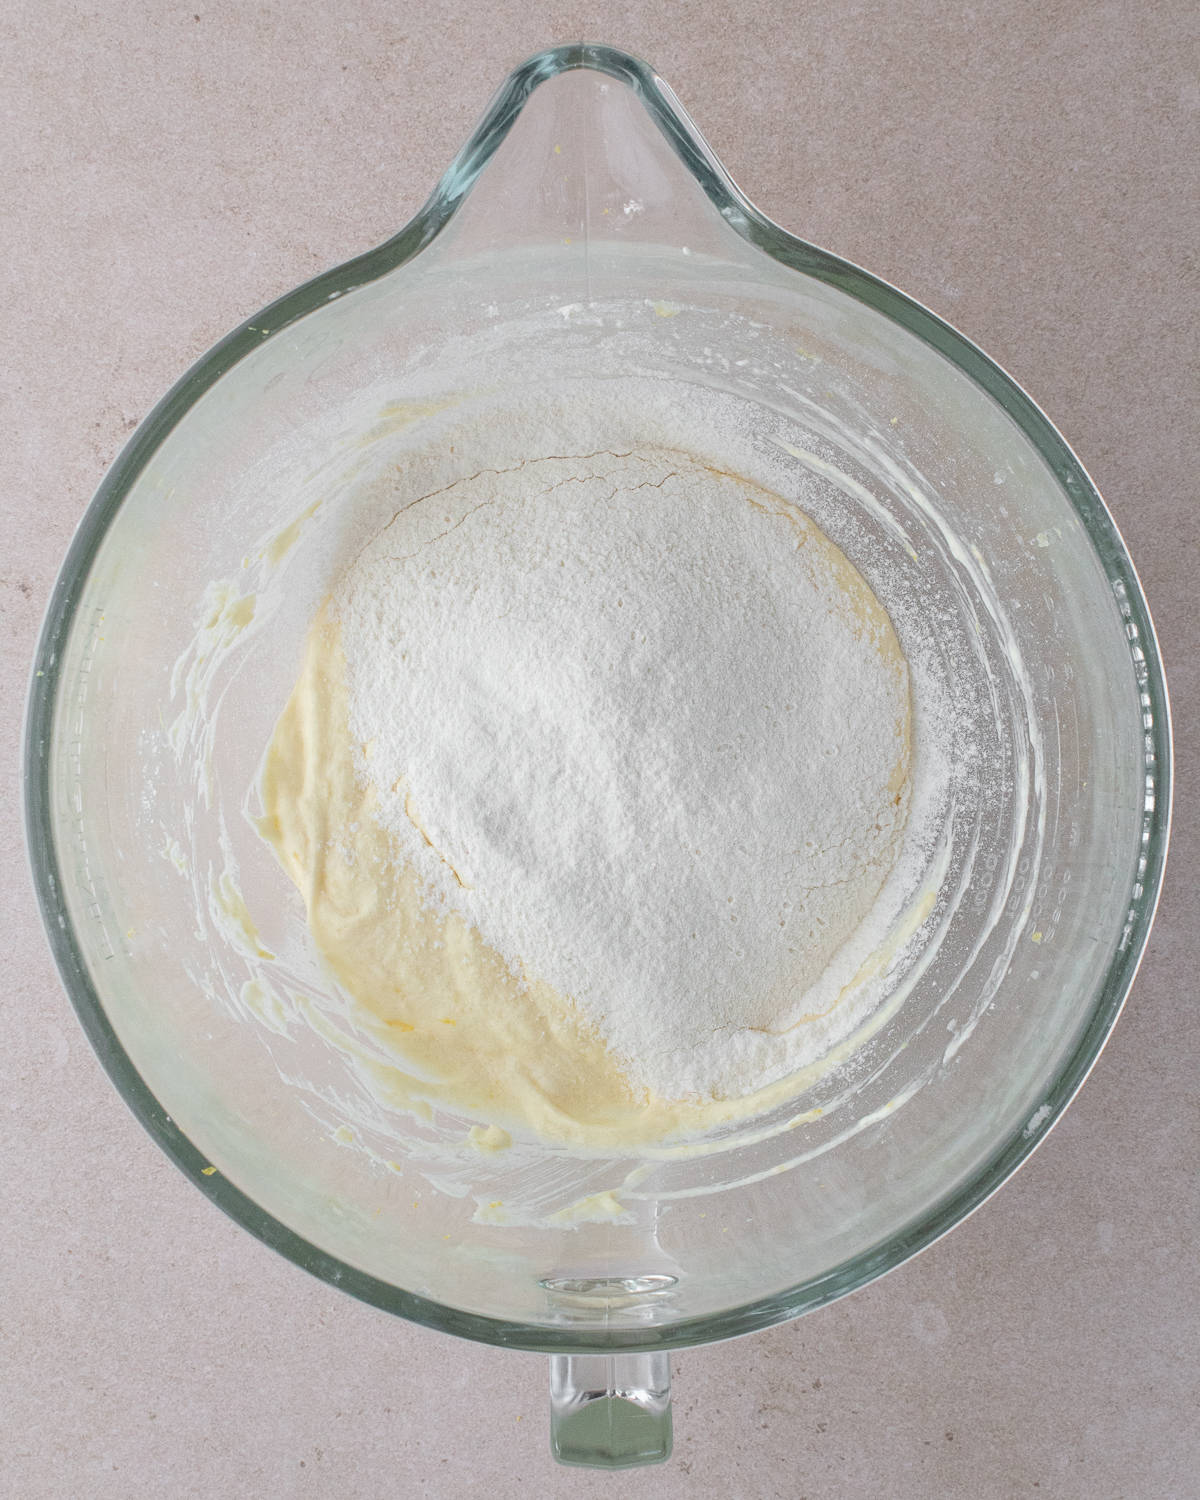 Flour, baking soda, baking powder and salt are sift into bowl